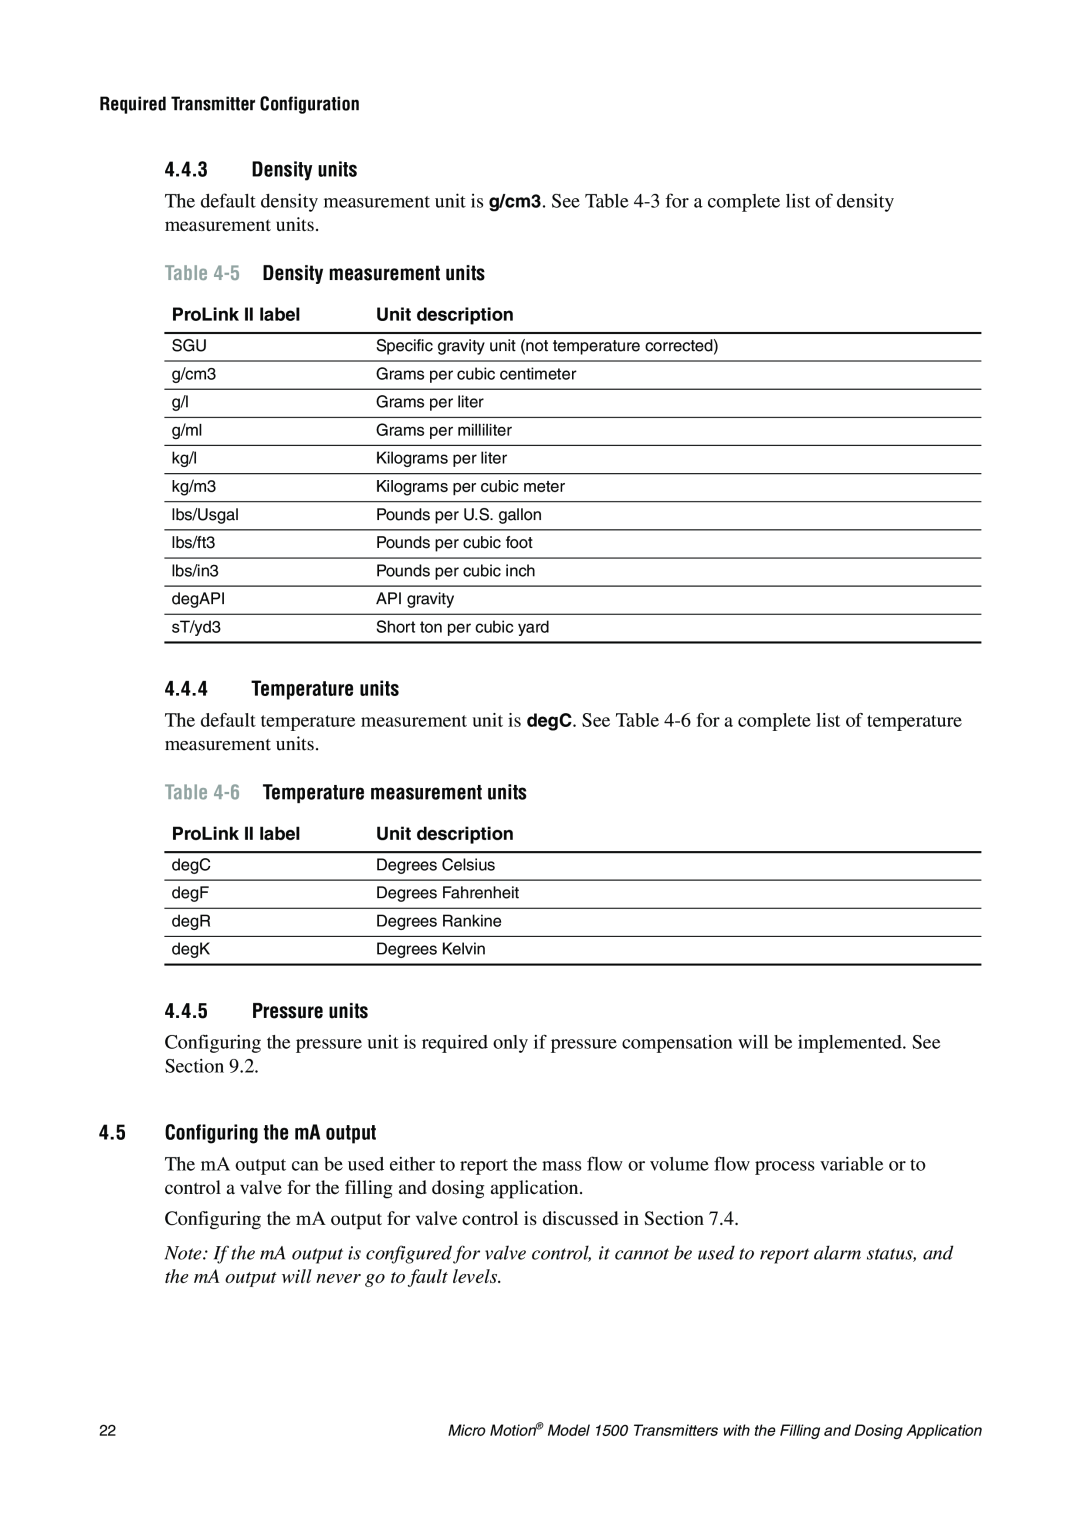 Emerson Process Management 1500 manual 4.4.3Density units, 5 Density measurement units, 4.4.4Temperature units 